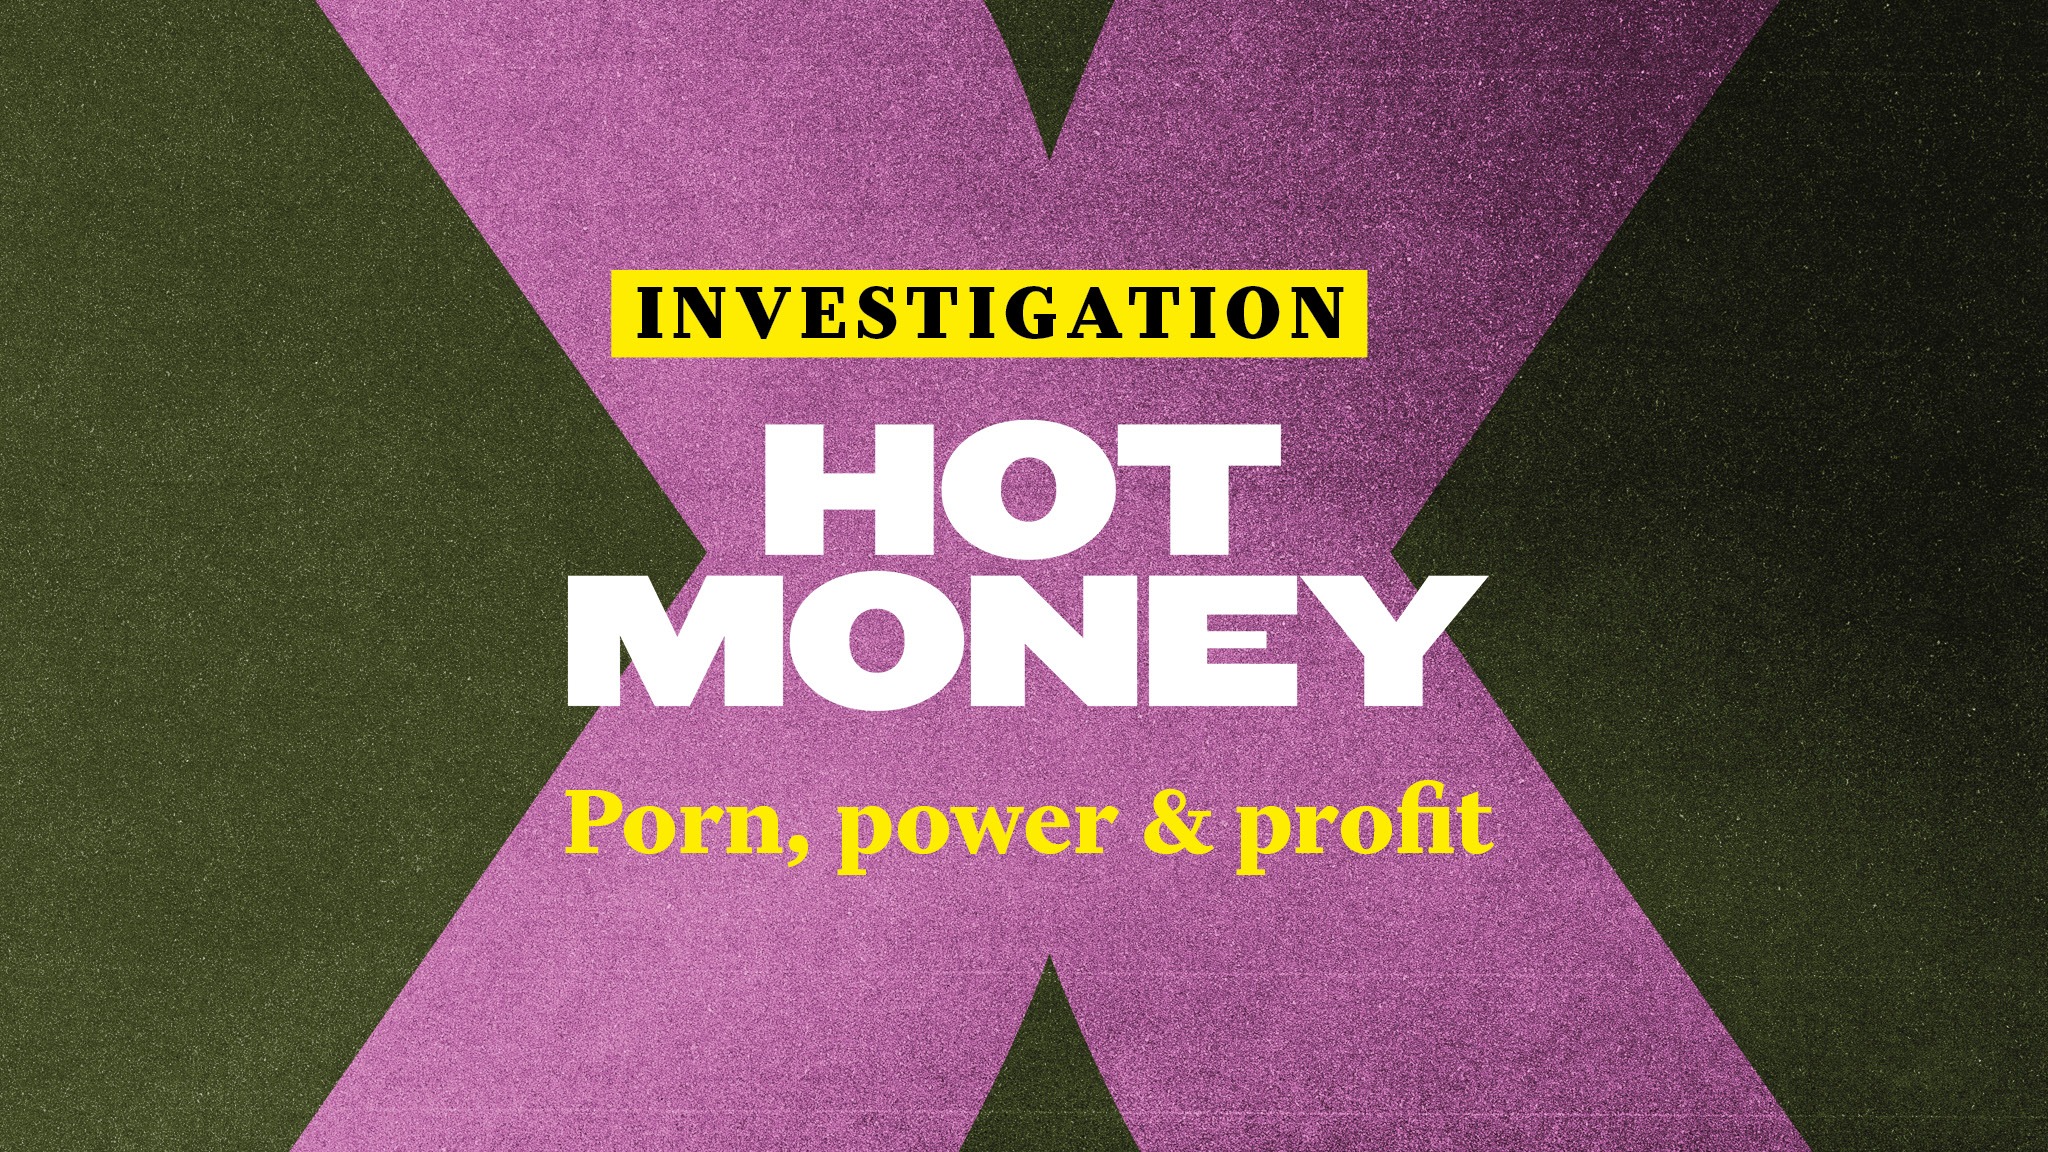 Hot Video Sex Com - Hot Money: porn, power and profit | Financial Times